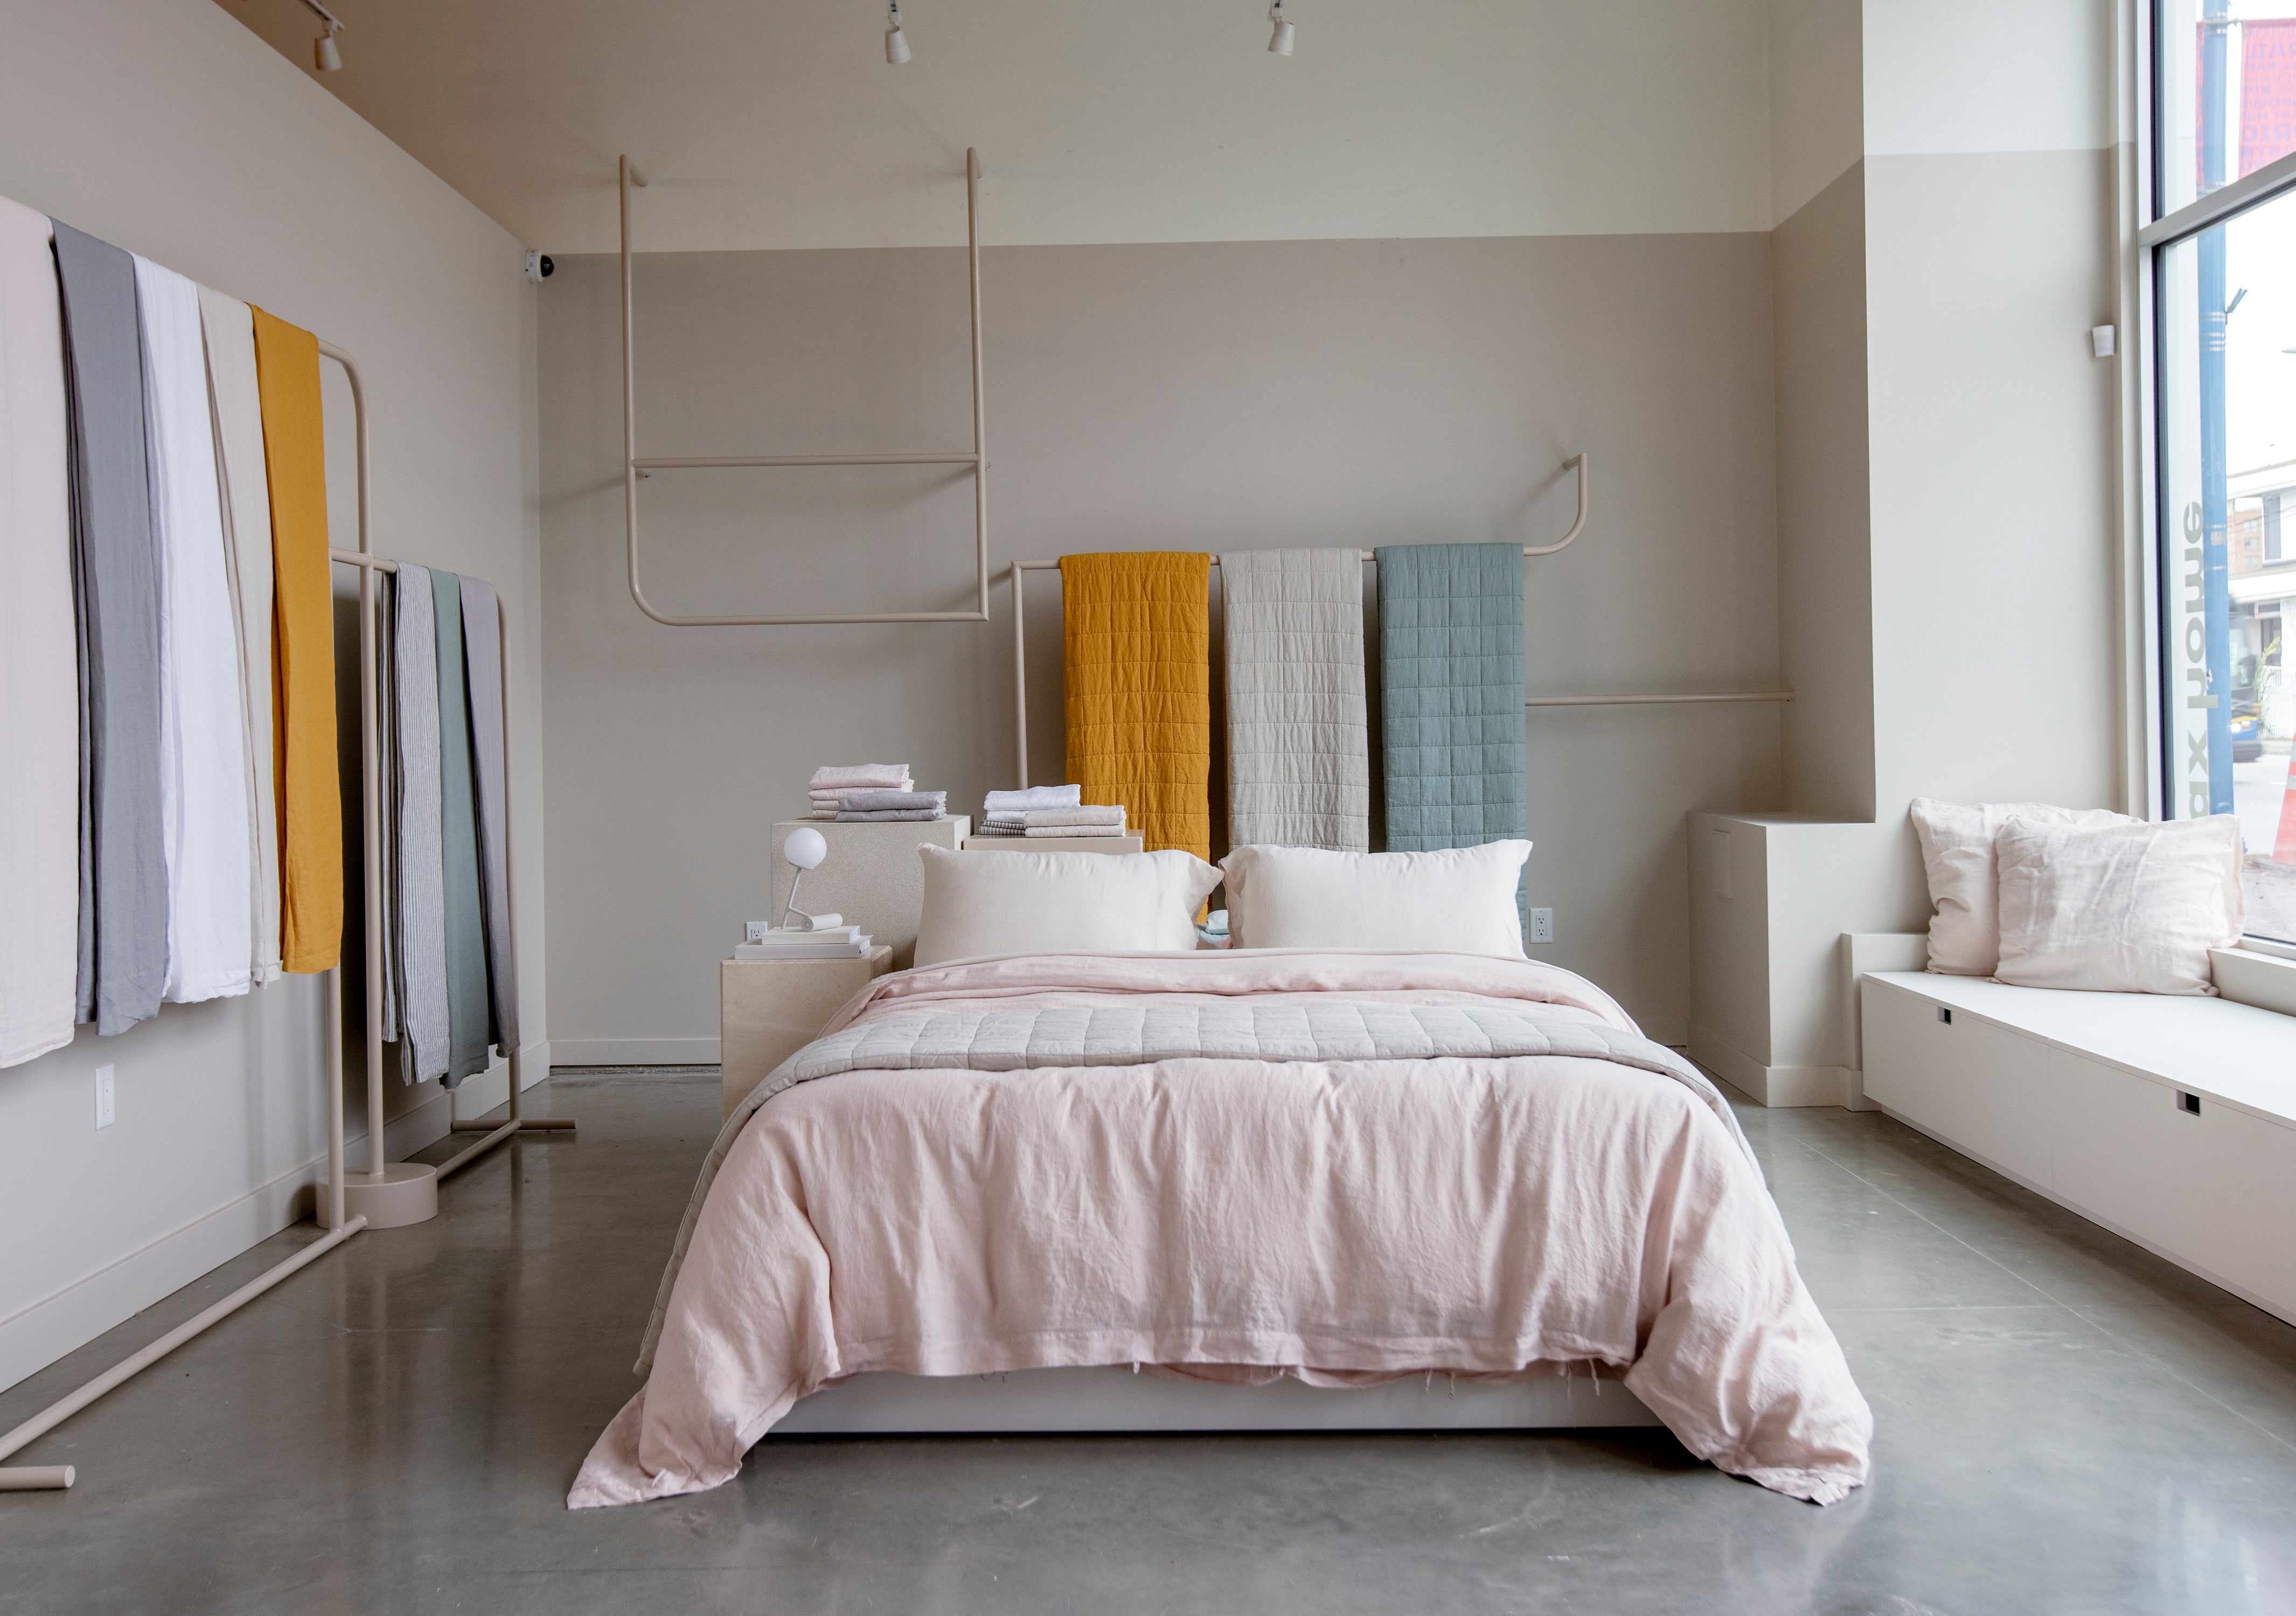 Wilet showroom bed and linen bedding